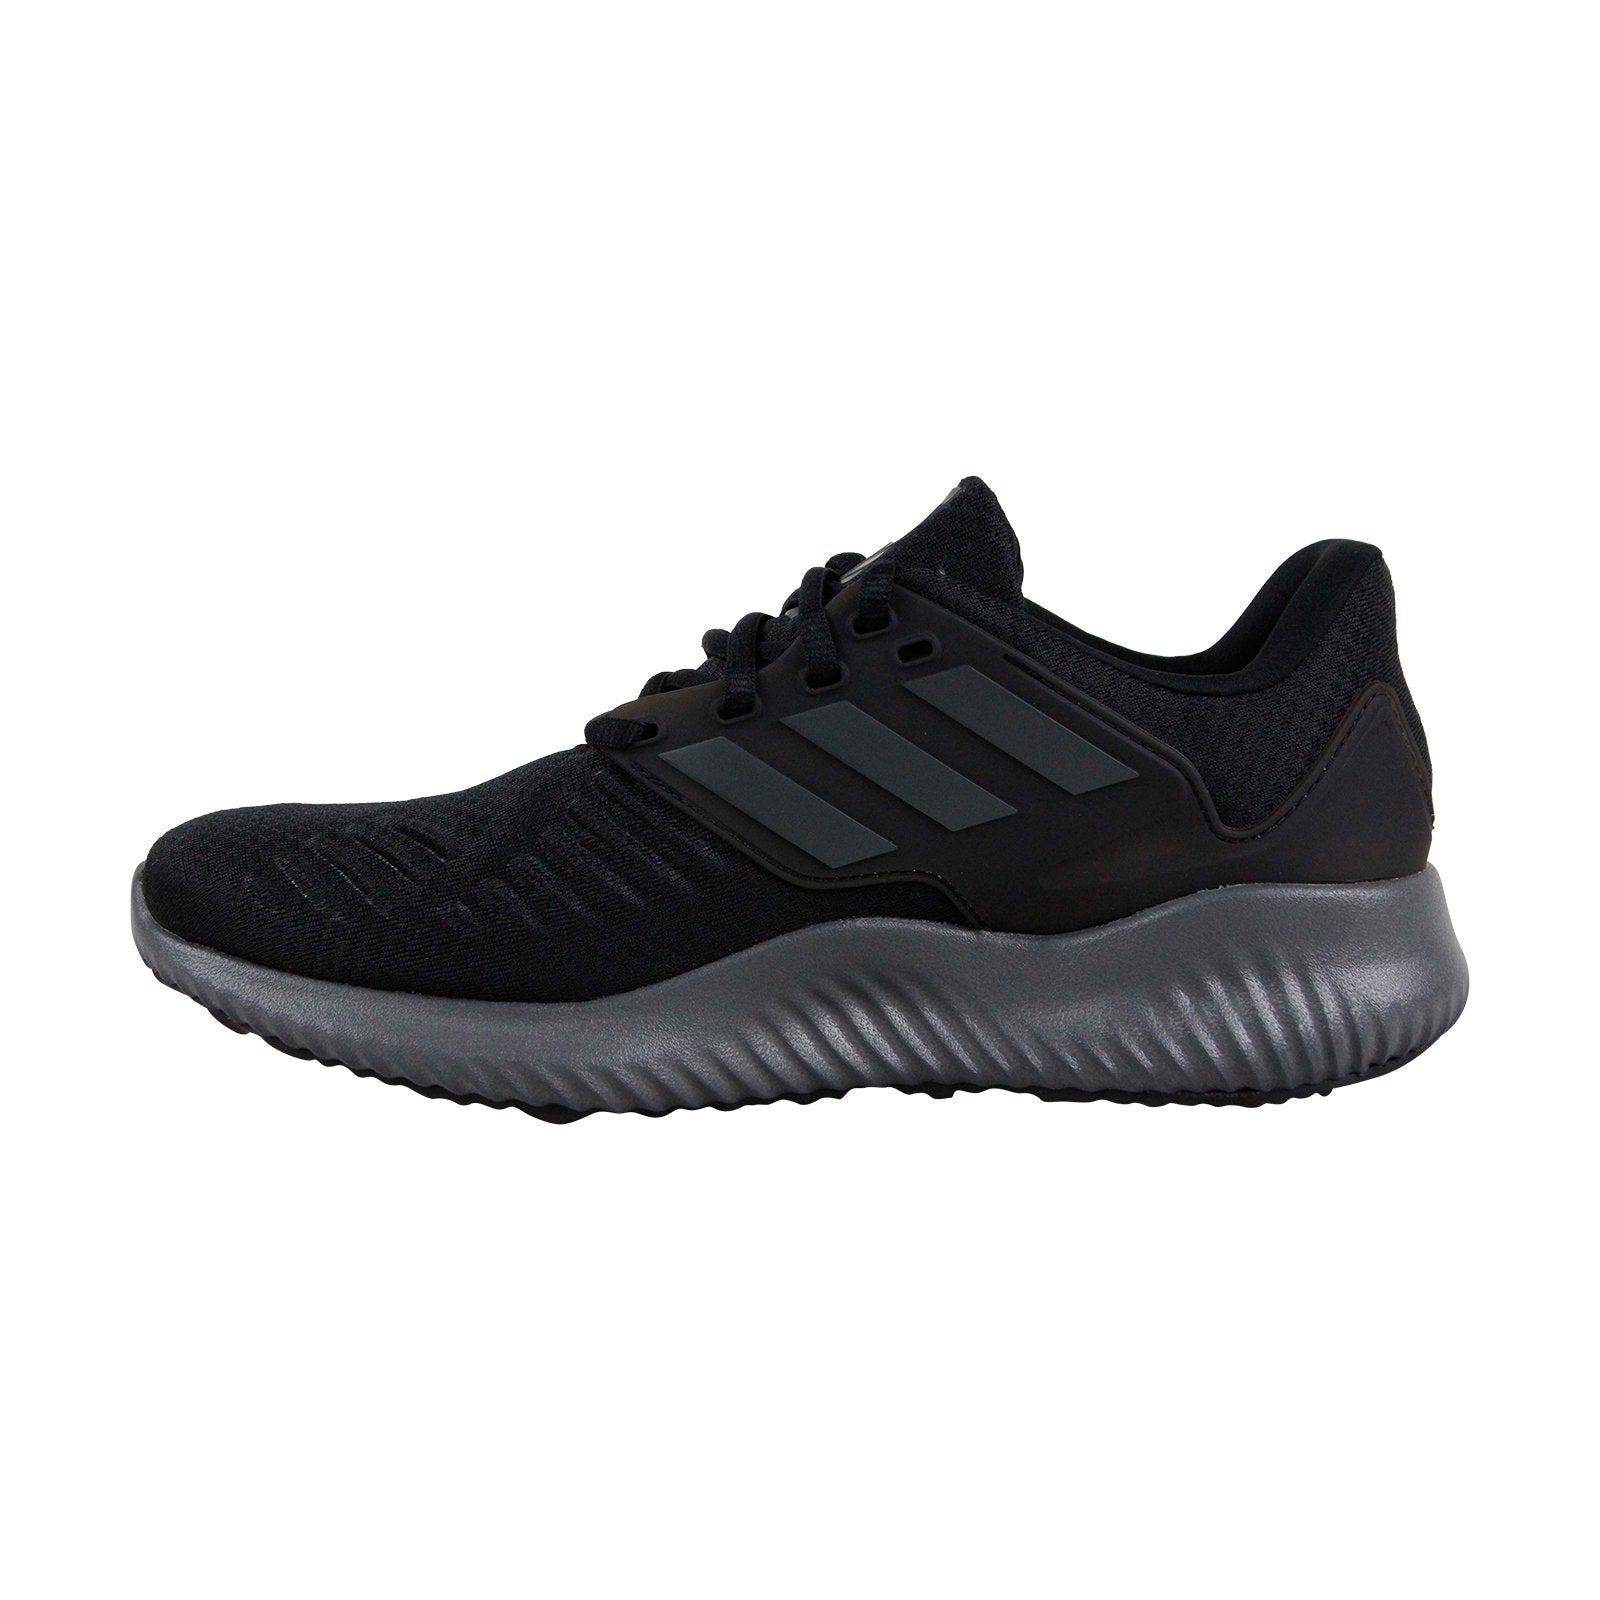 benzin fisk miljø Adidas Alphabounce Rc AQ0551 Mens Black Canvas Lace Up Athletic Runnin -  Ruze Shoes